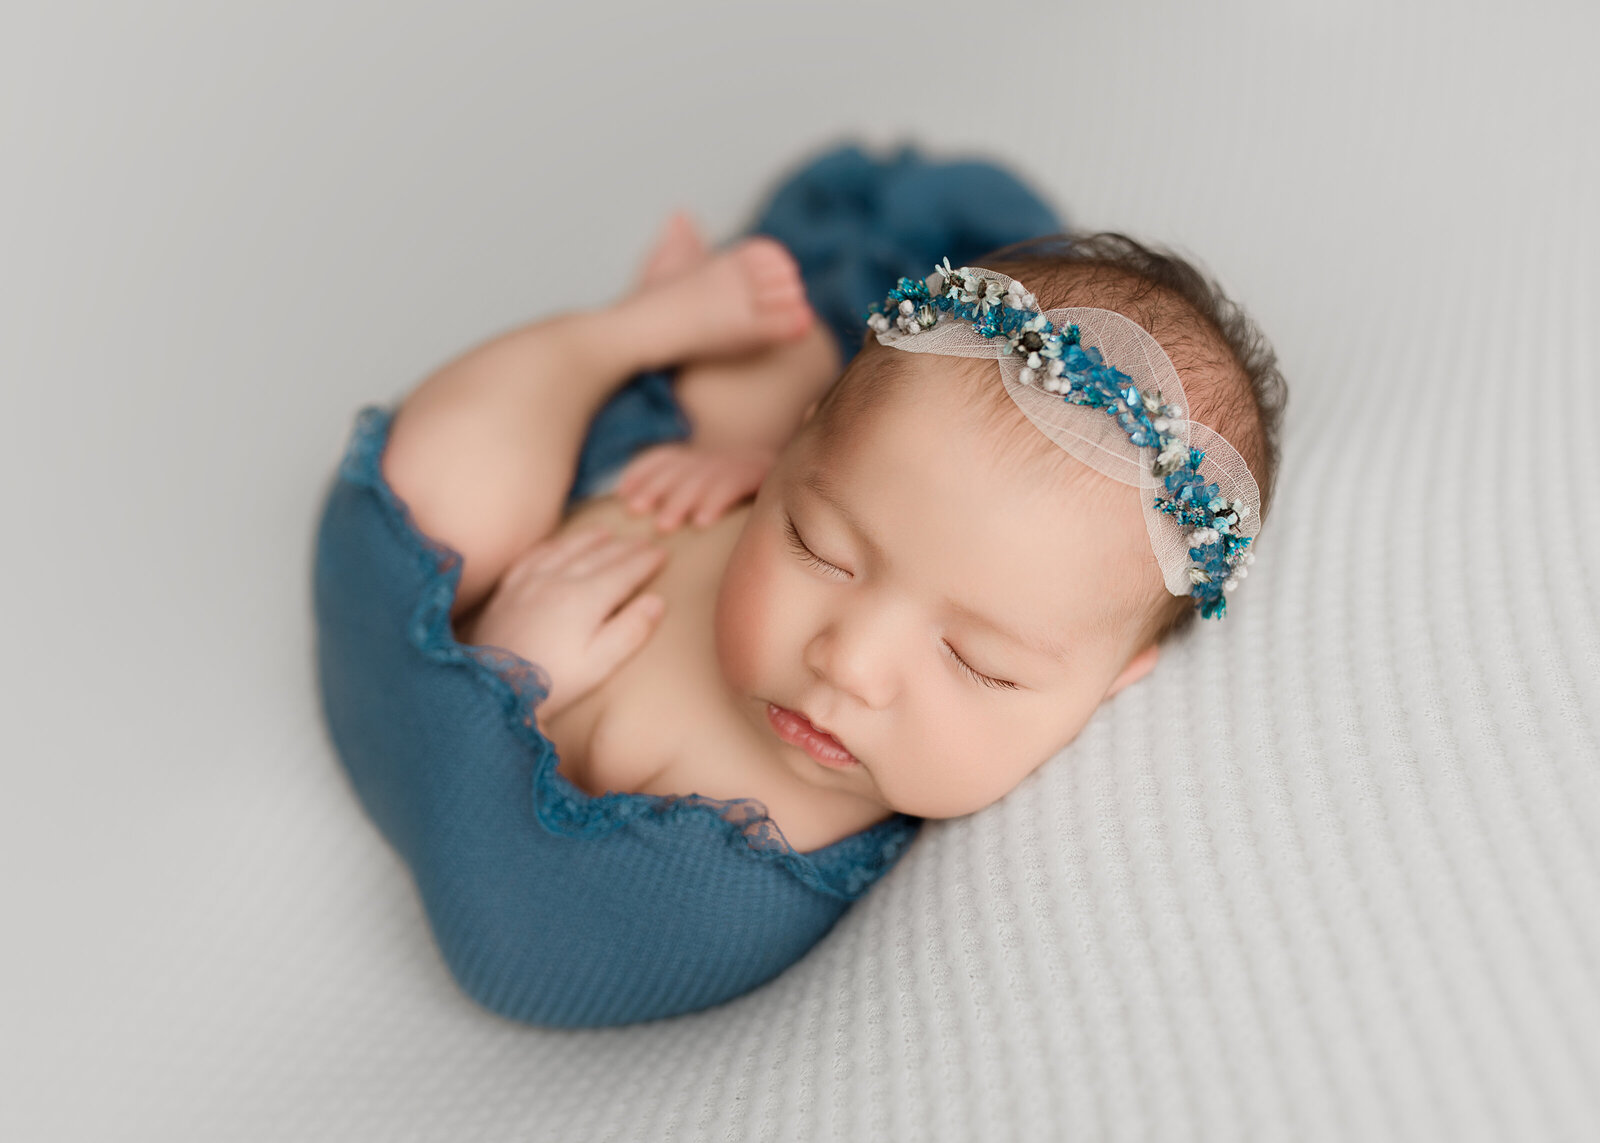 baby in blue located in oswego ny studio on white backdrop in studio newborn photo shoot